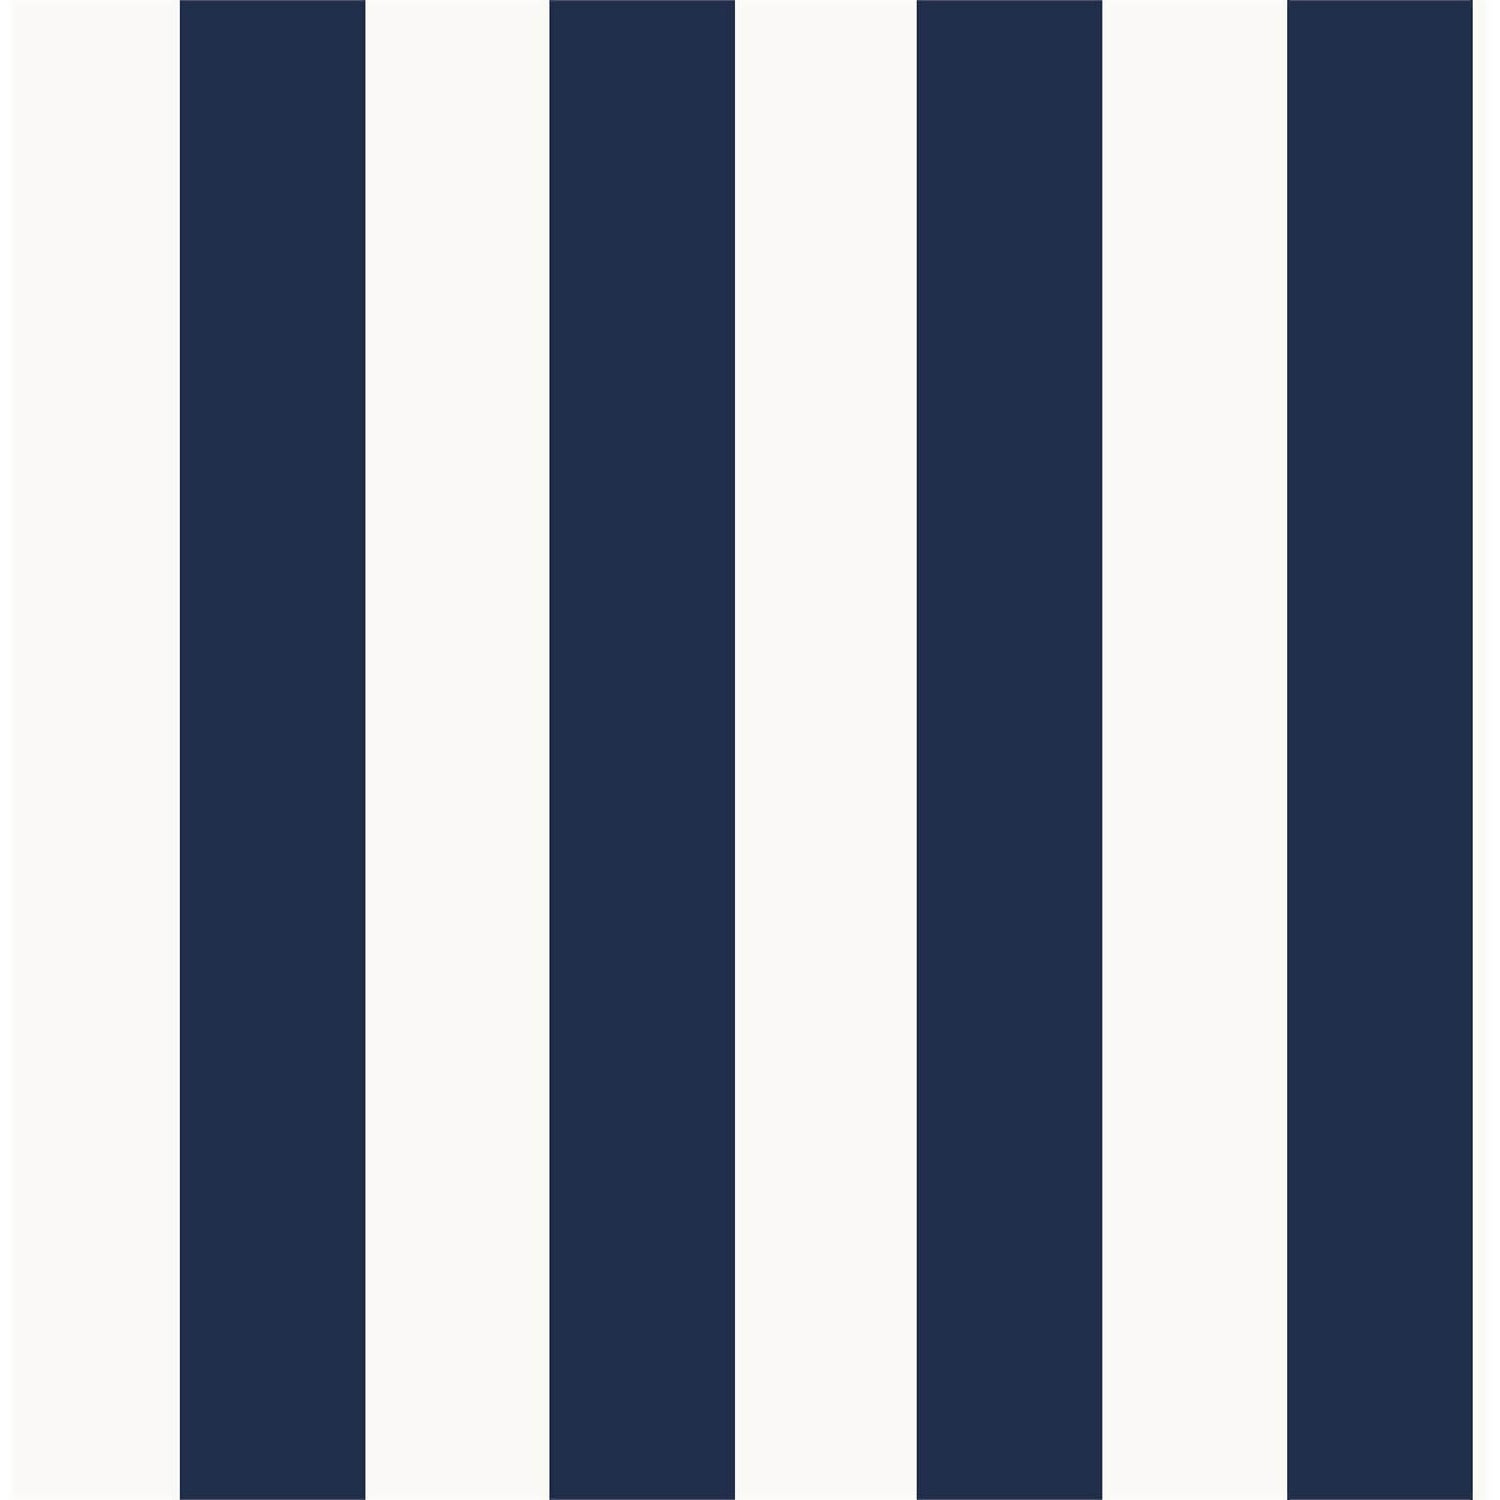 Spalding Stripe by Ralph Lauren  Blue  White  Wallpaper  Wallpaper  Direct